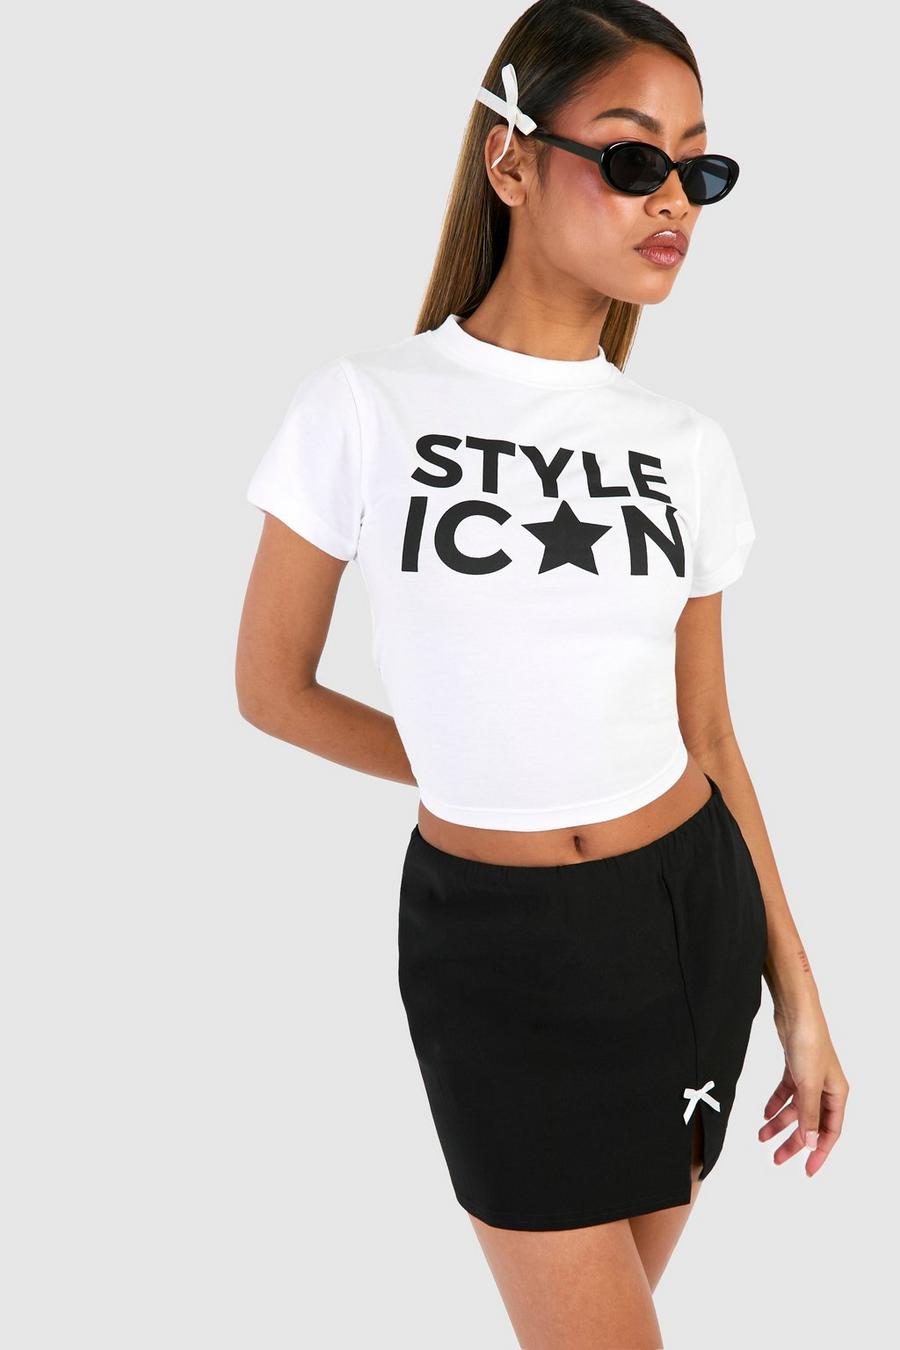 Style Icon Baby T-Shirt, White